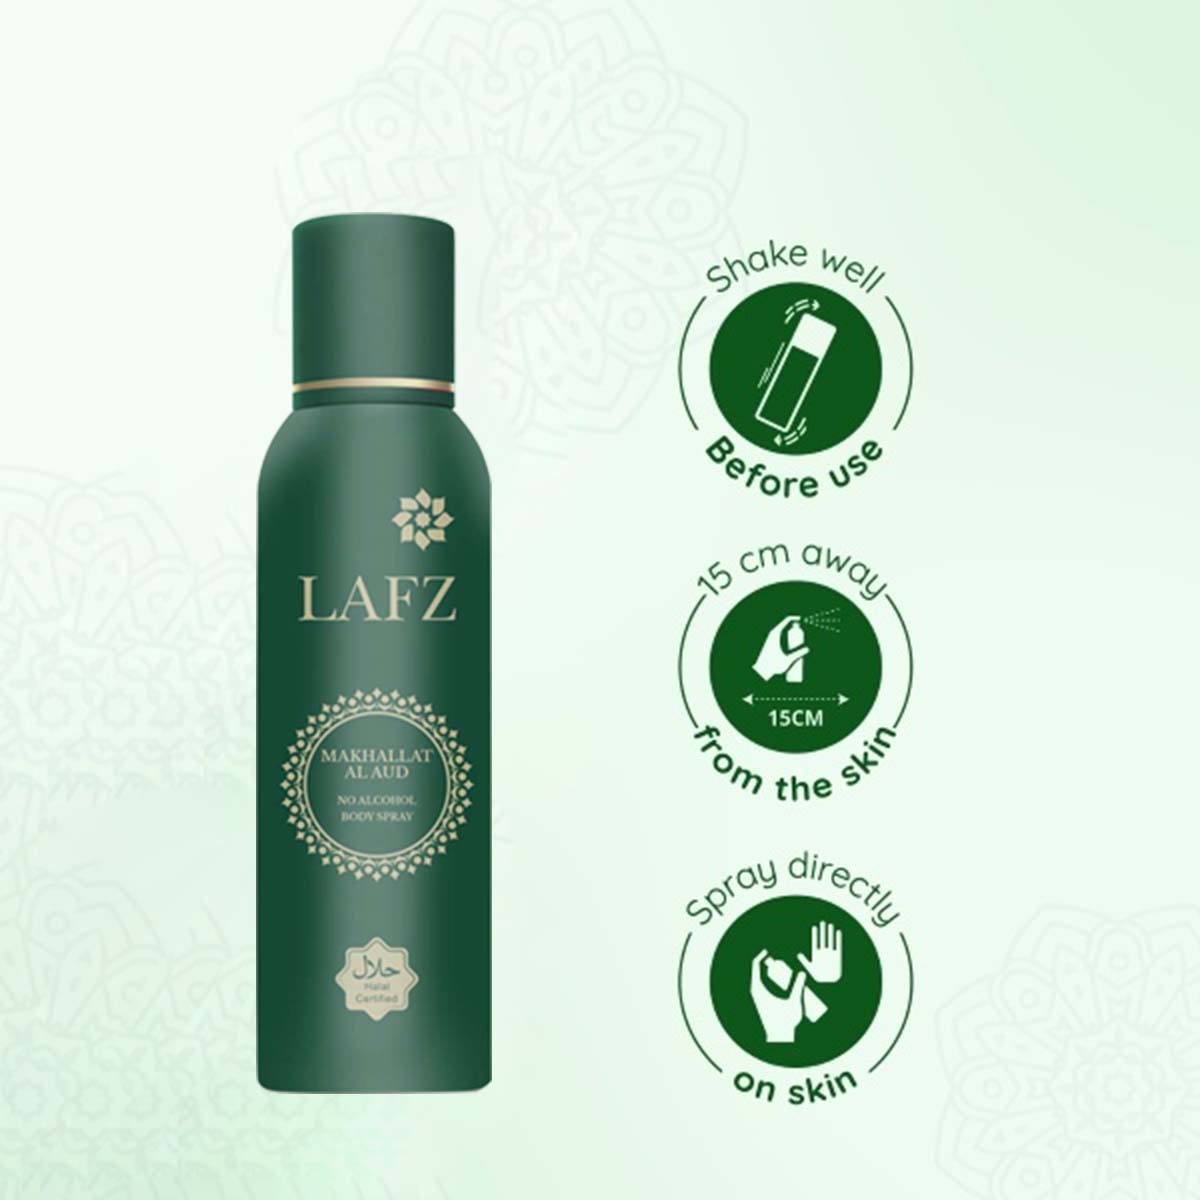 Lafz No Alcohol Perfume (160ml) - Makhallat Al Aud